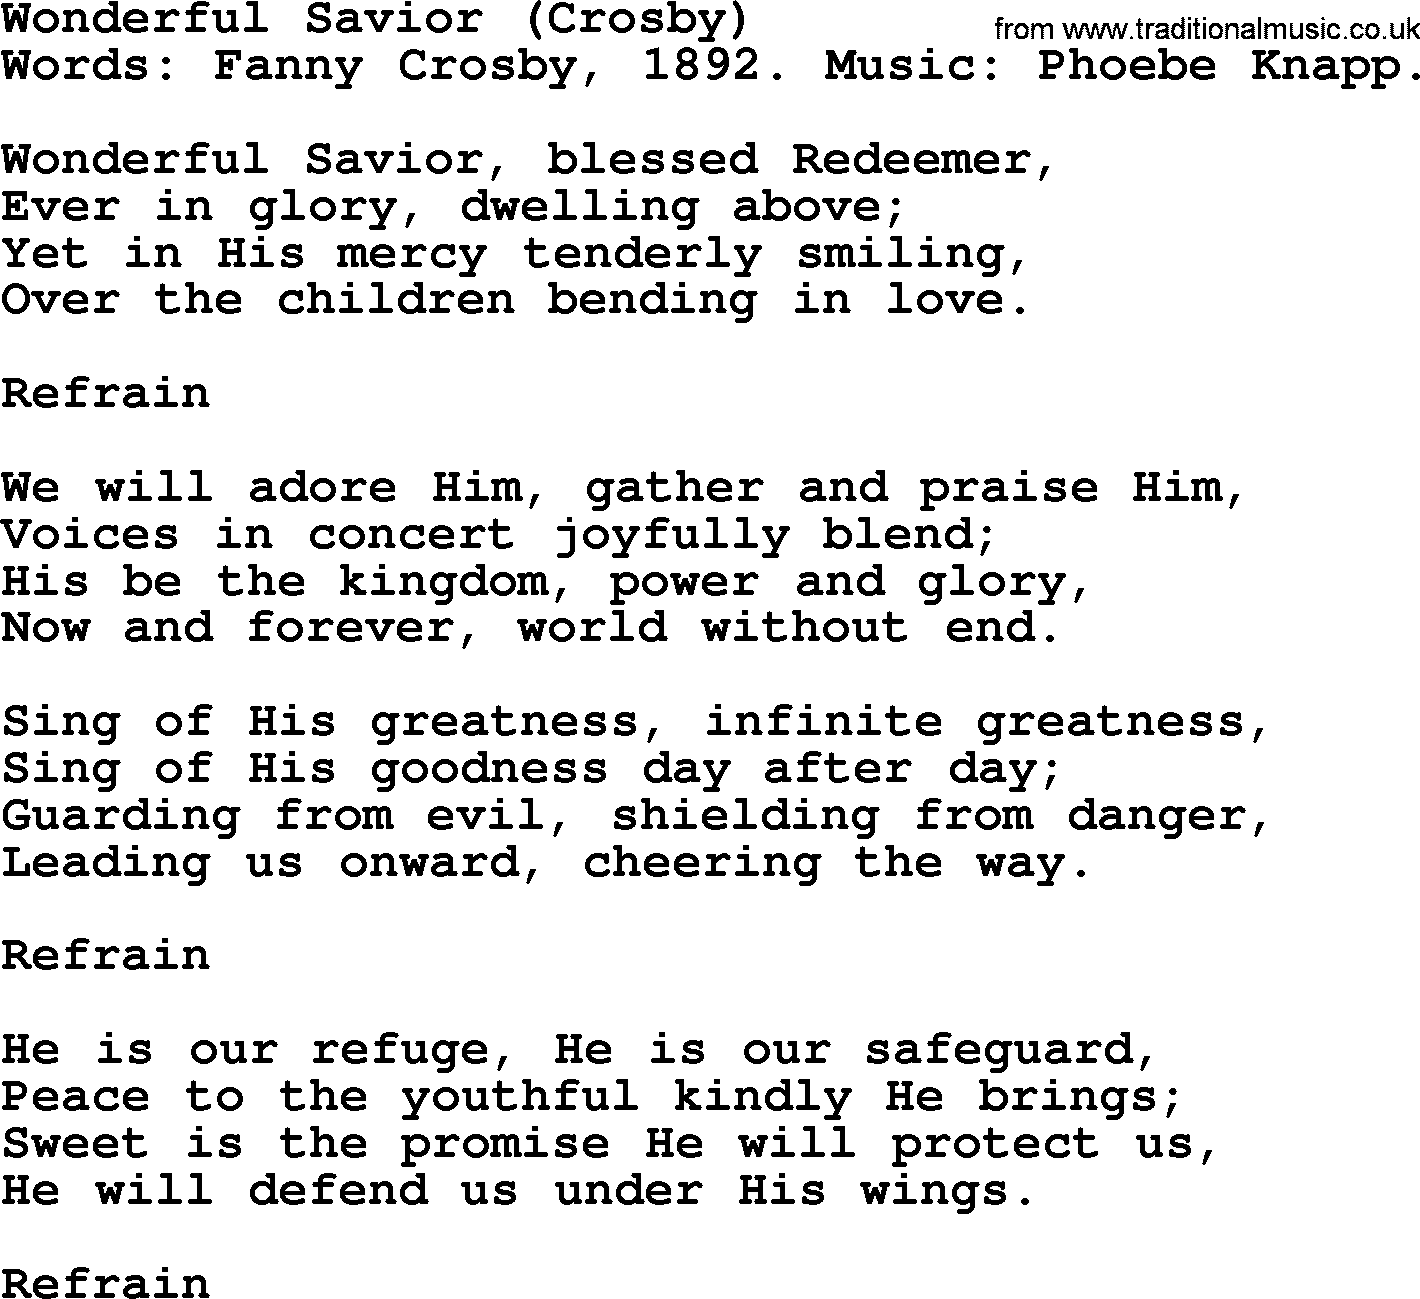 Fanny Crosby song: Wonderful Savior, lyrics